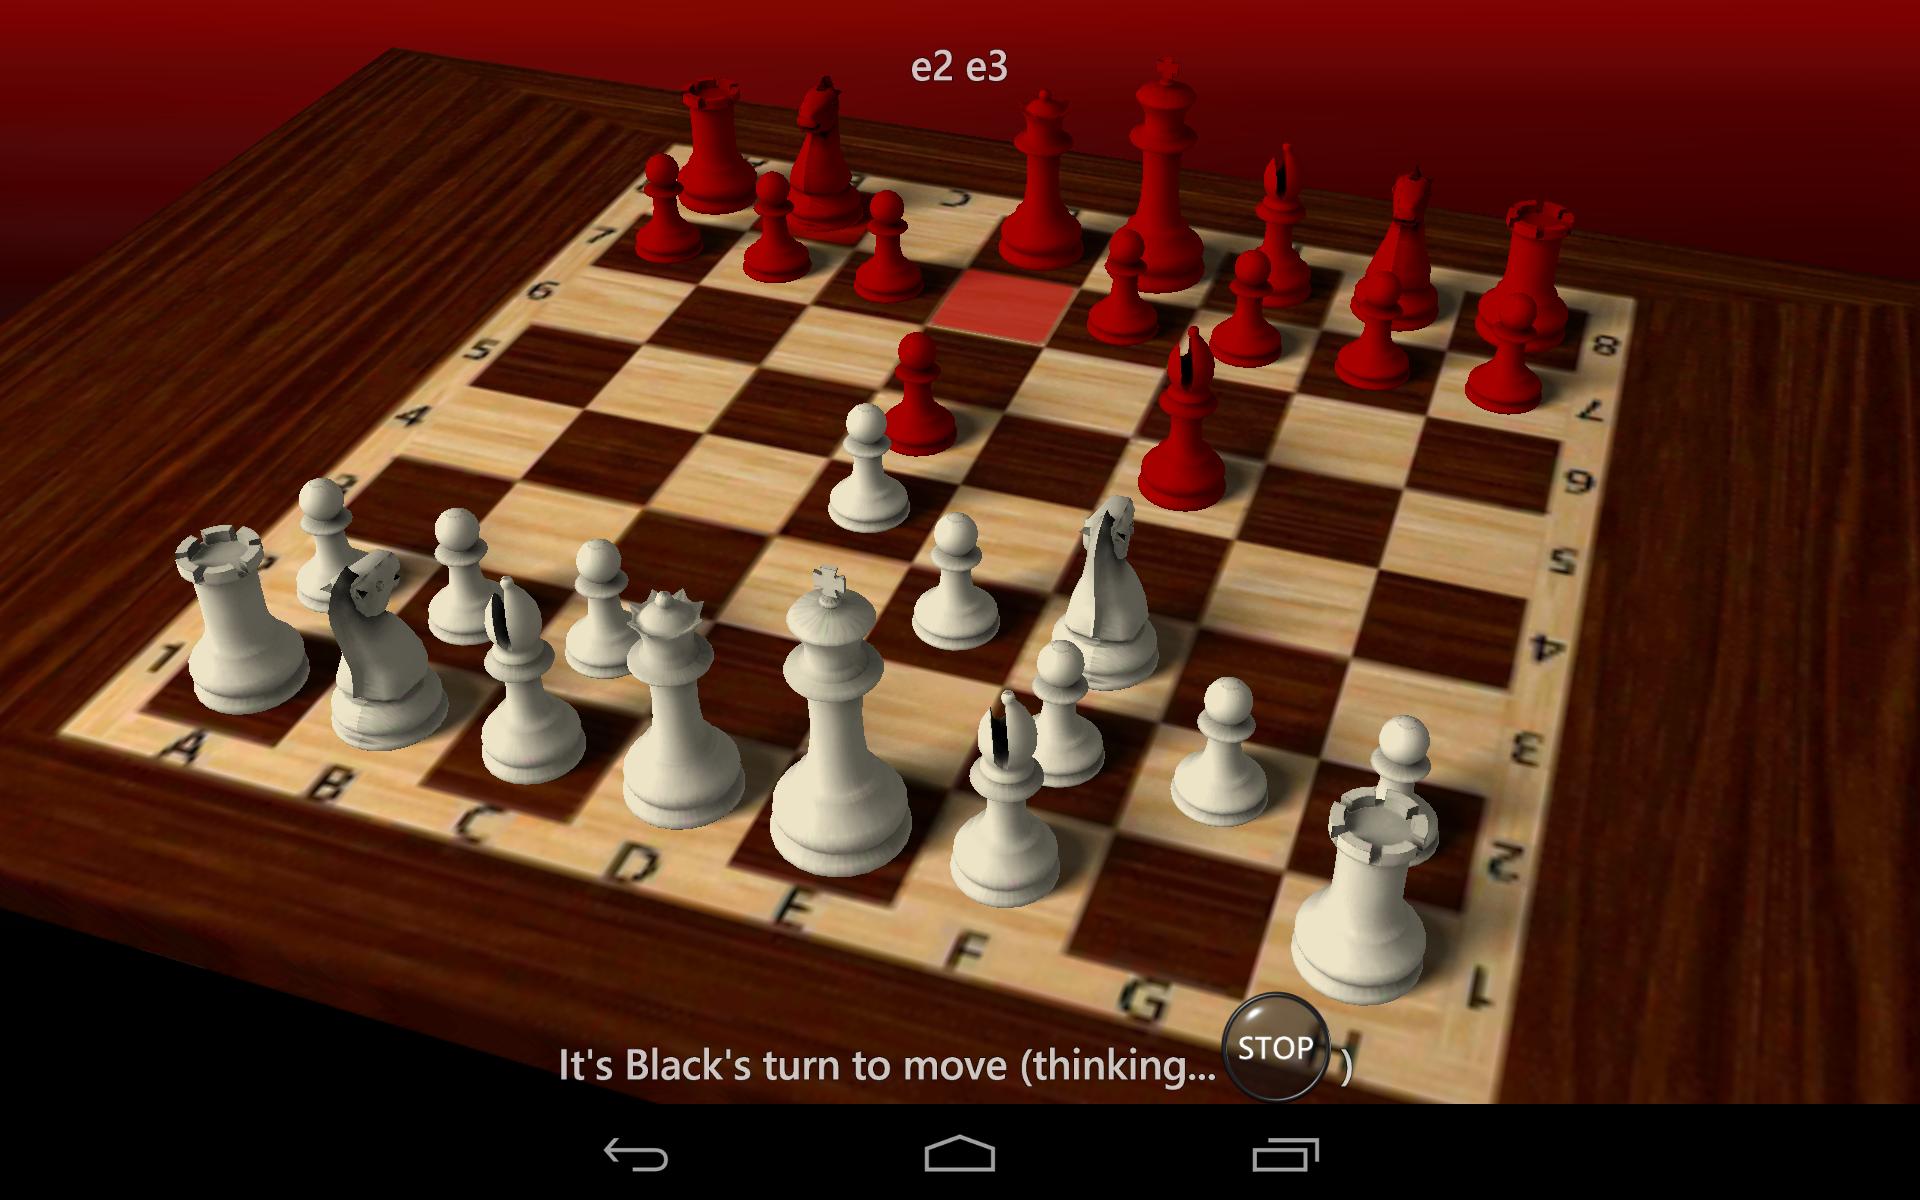 Игра в шахматы с живыми игроками. Шахматы игра шахматы игра в шахматы игра. Игра шахматы 3l. Шахматная игра 3д. Шахматы 3д (Chess 3d free).